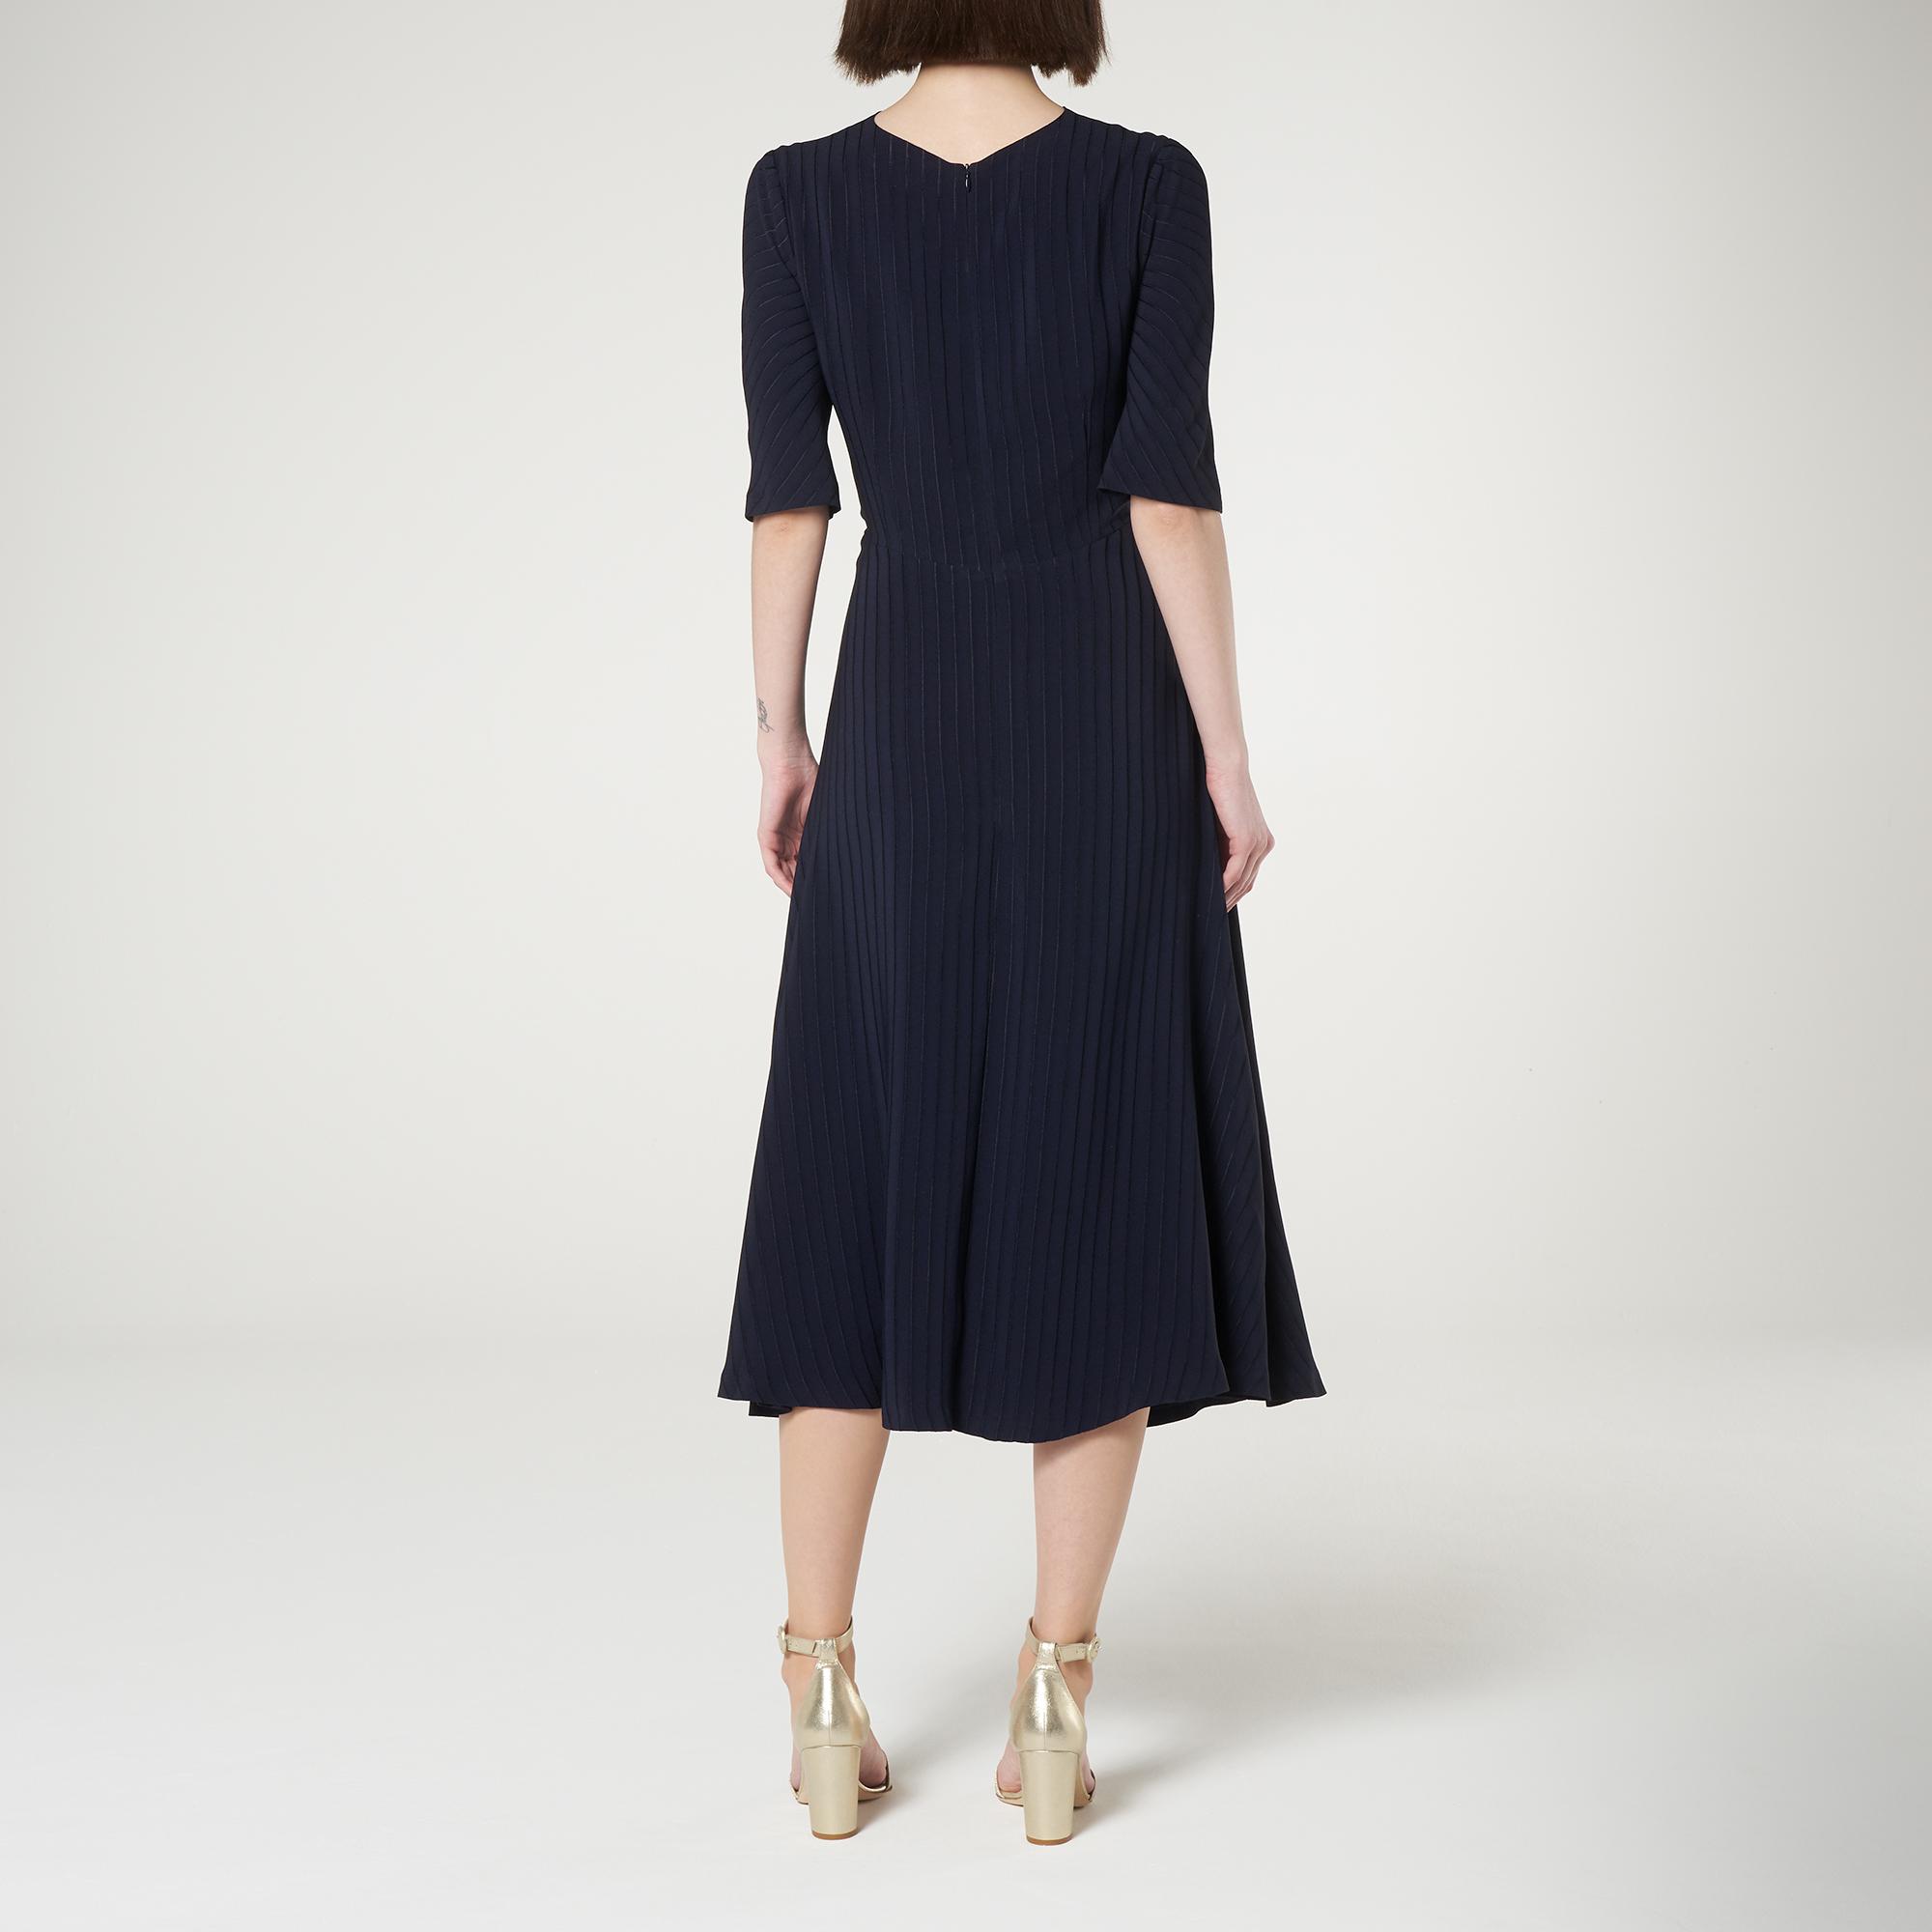 L.K.Bennett Mariann Navy Twist Neck Midi Dress | eBay